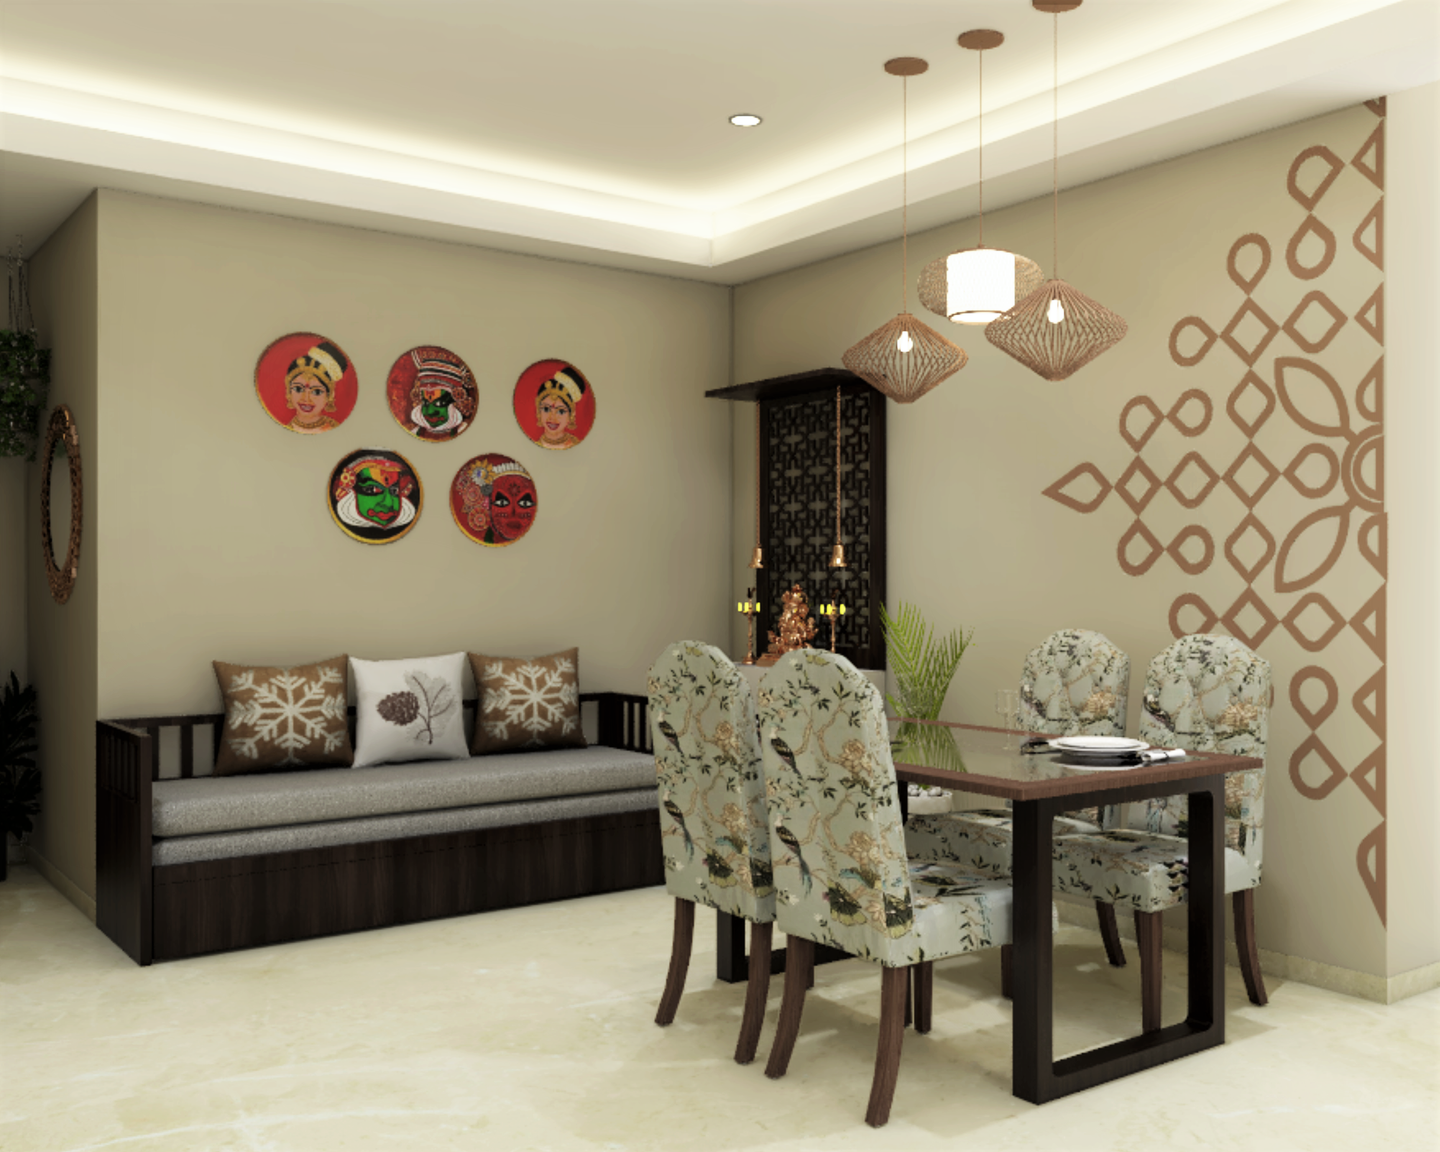 4 Seater Dining Room Design - Livspace